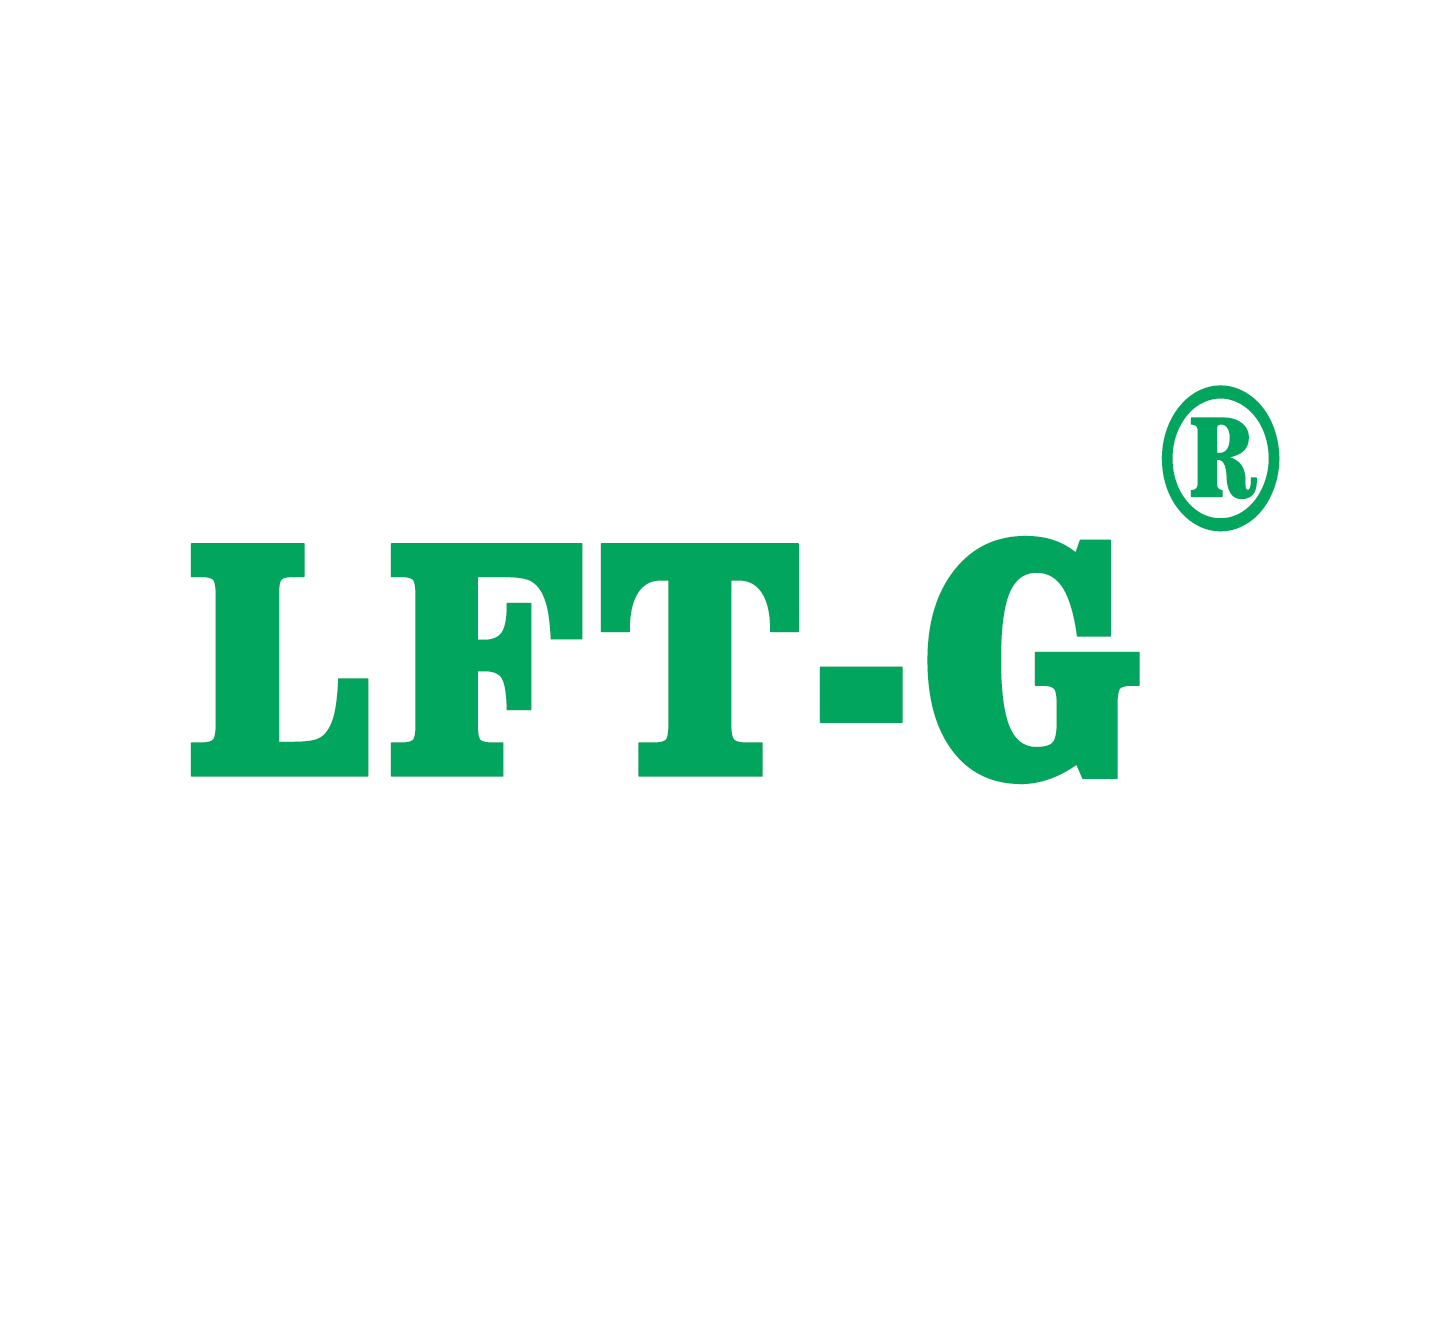  LFT-G 新年に新しい旅を始める